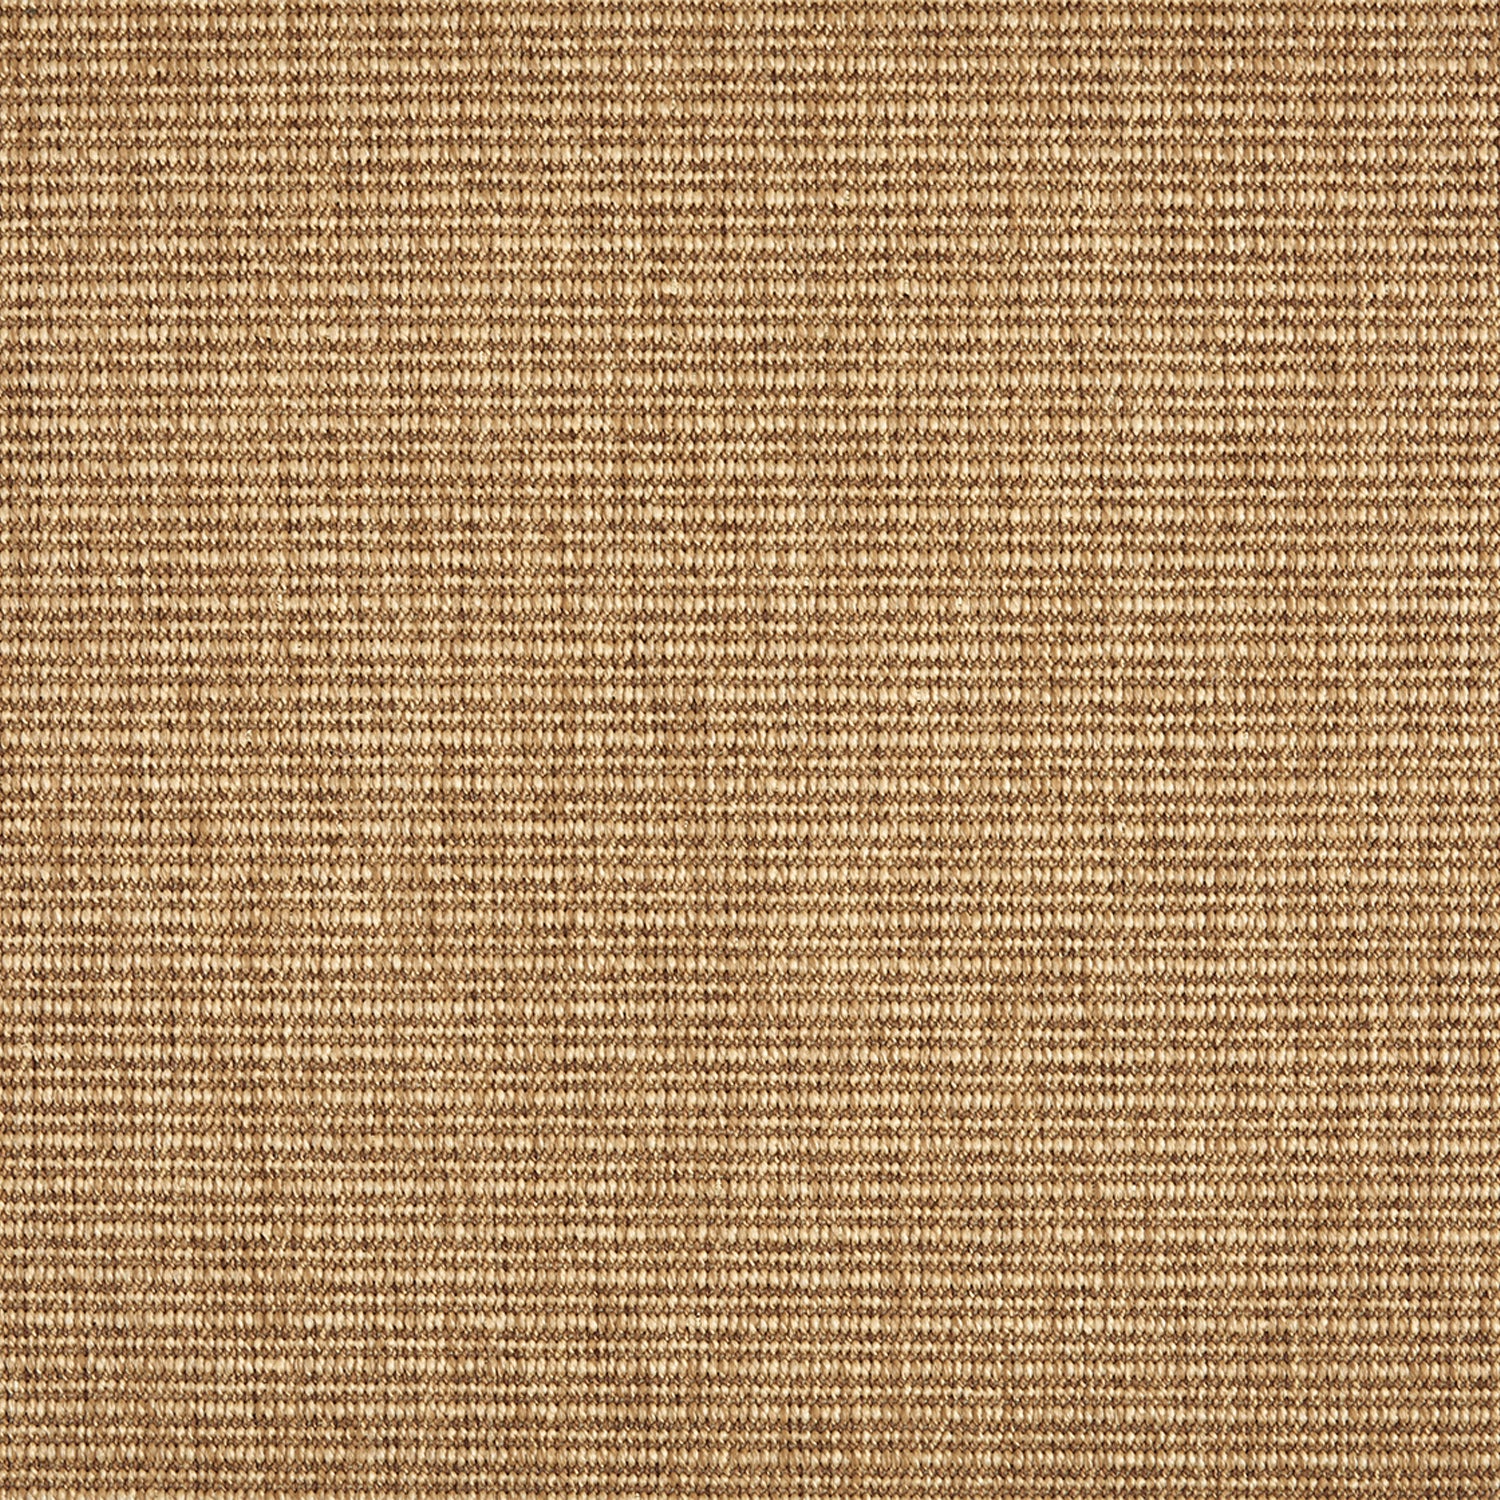 Outdoor broadloom carpet swatch in a ribbed flat weave in mottled tan.